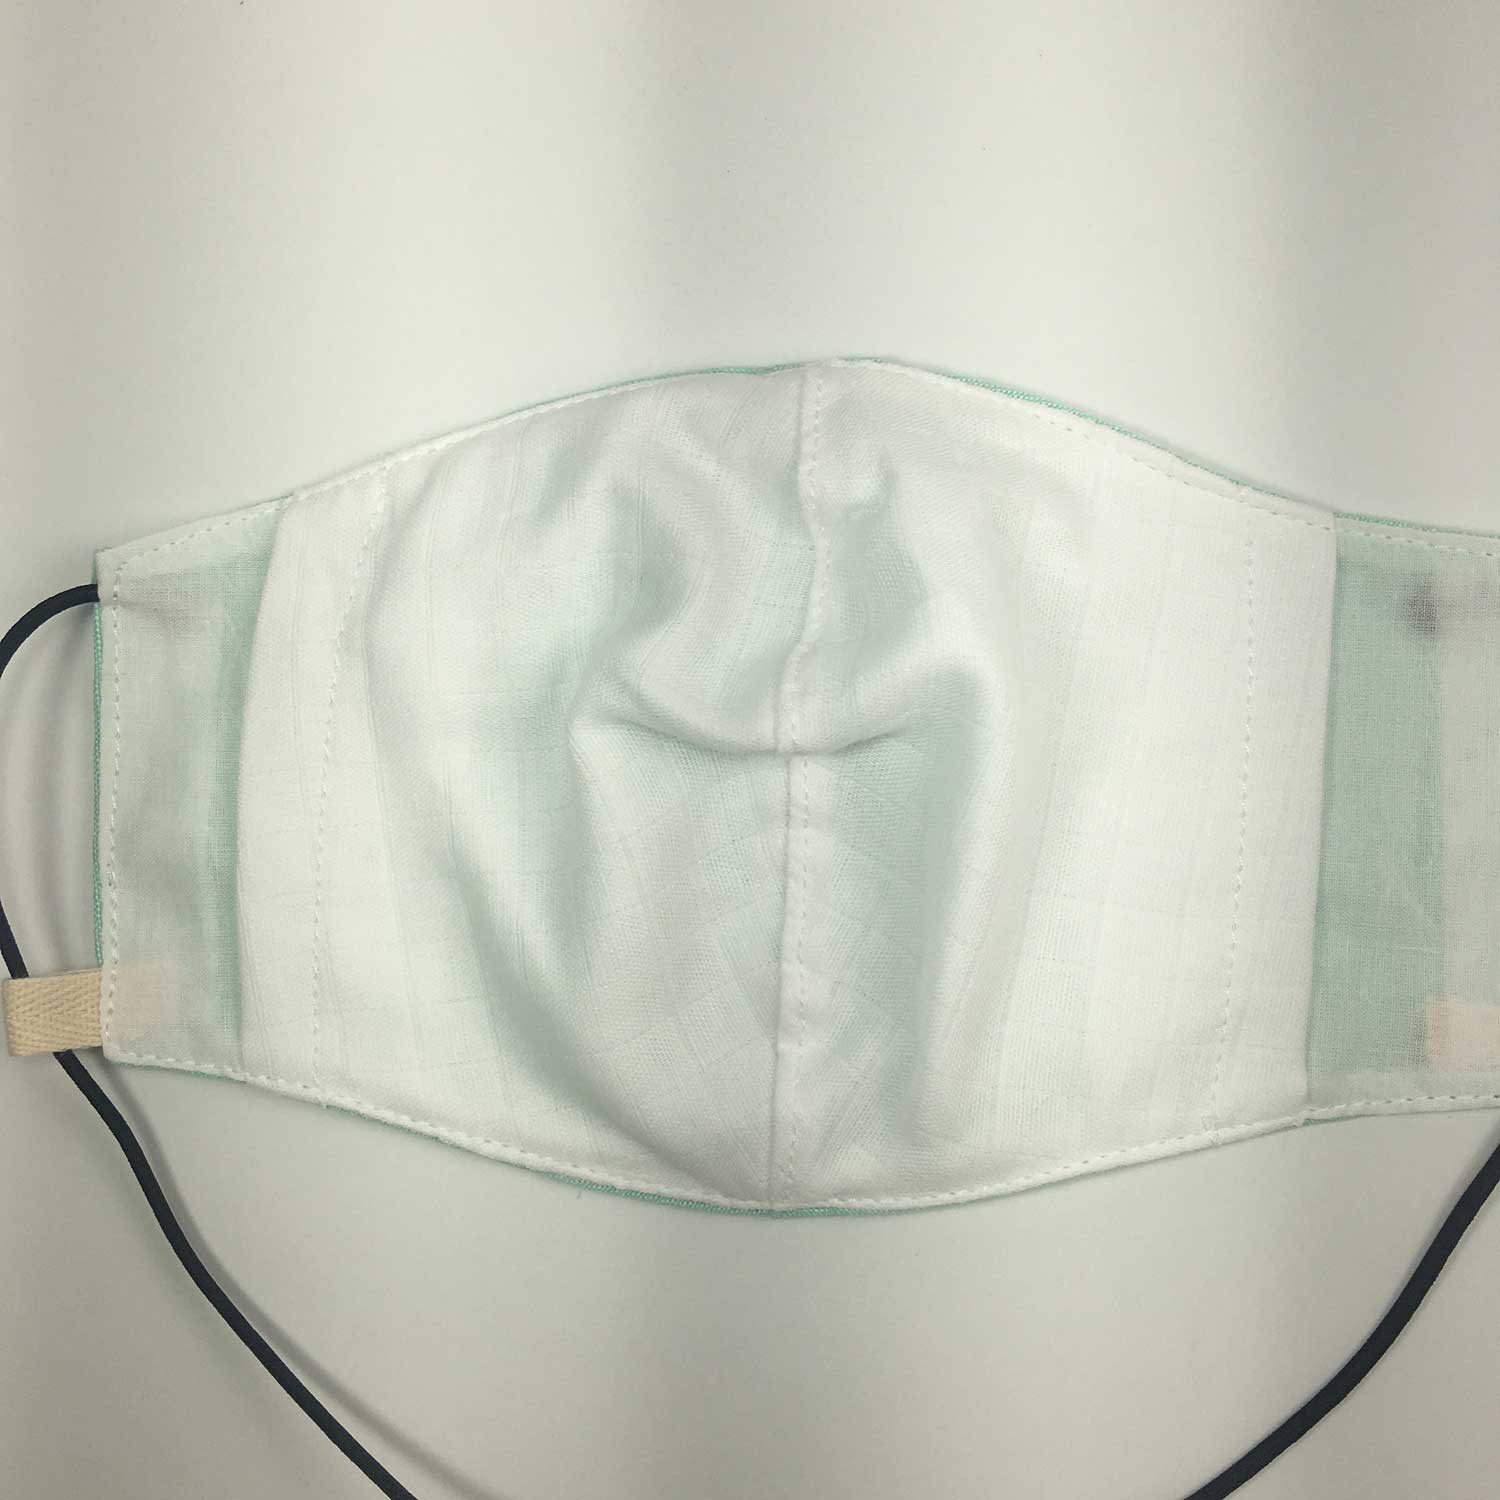 MEDIUM Oxford Cotton Adjustable Face Masks Filter Pocket - White